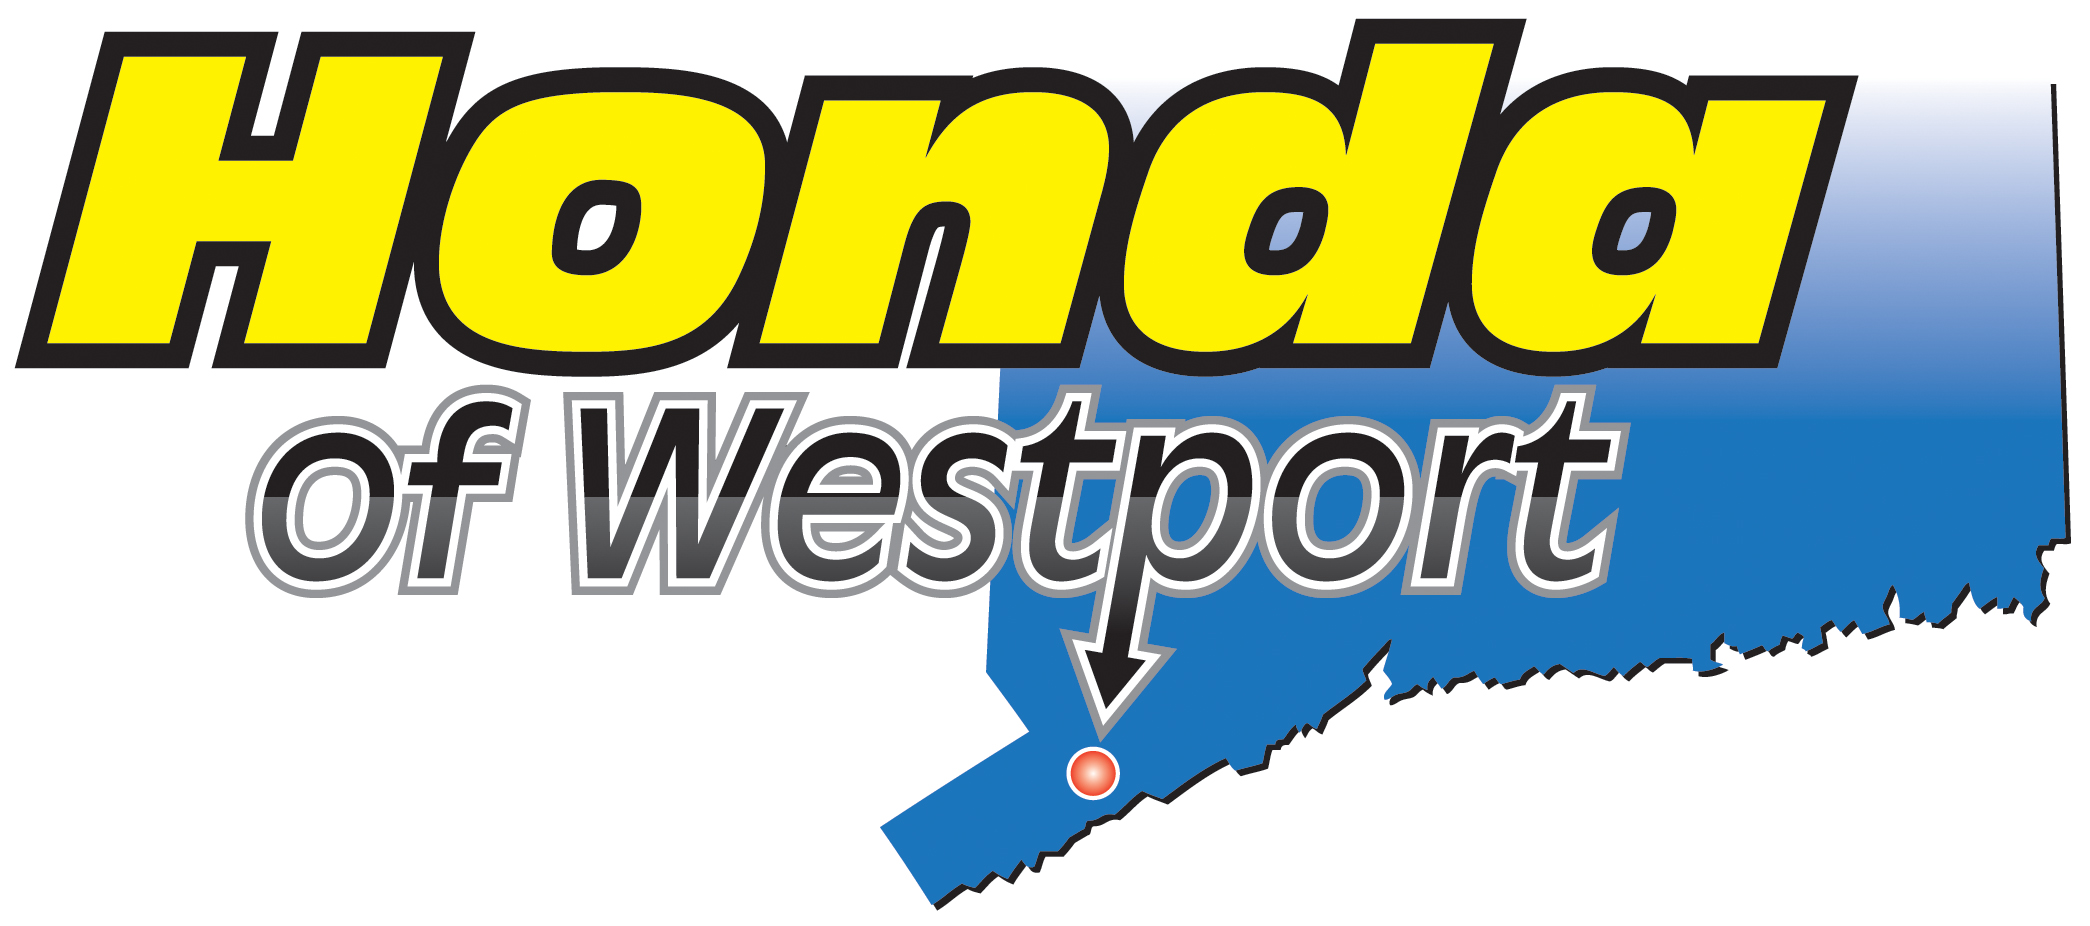 Duck13 - logo - honda westport.jpg